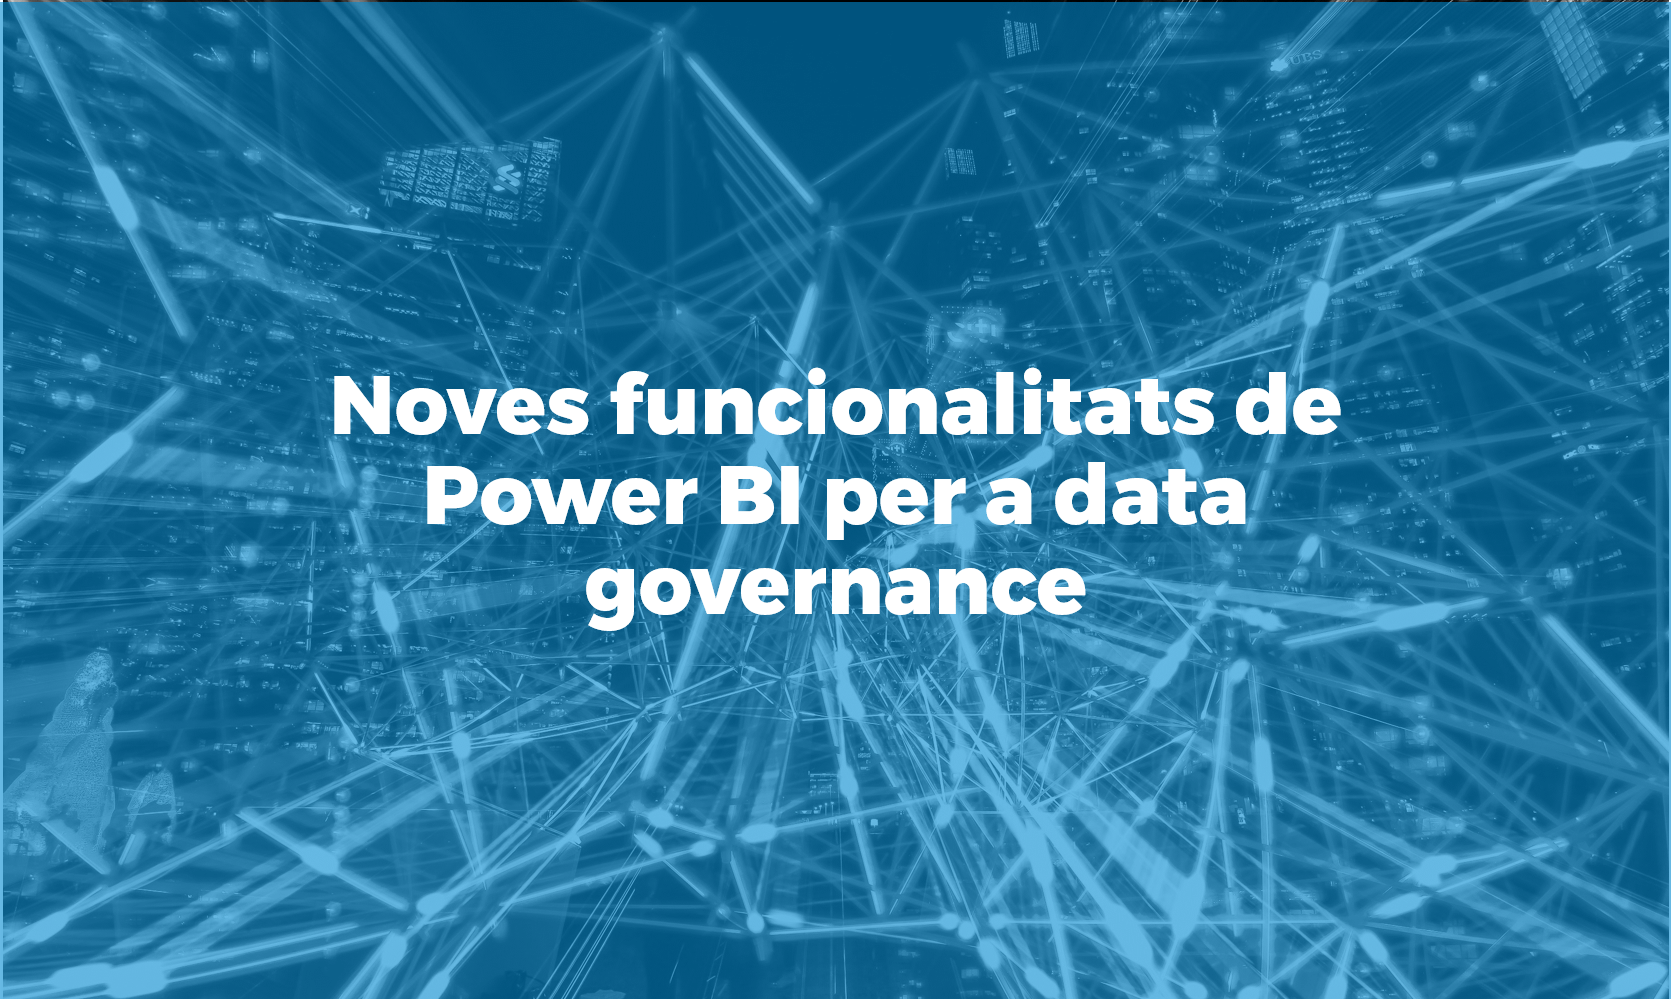 Com pots fer servir Power BI per al data governance?